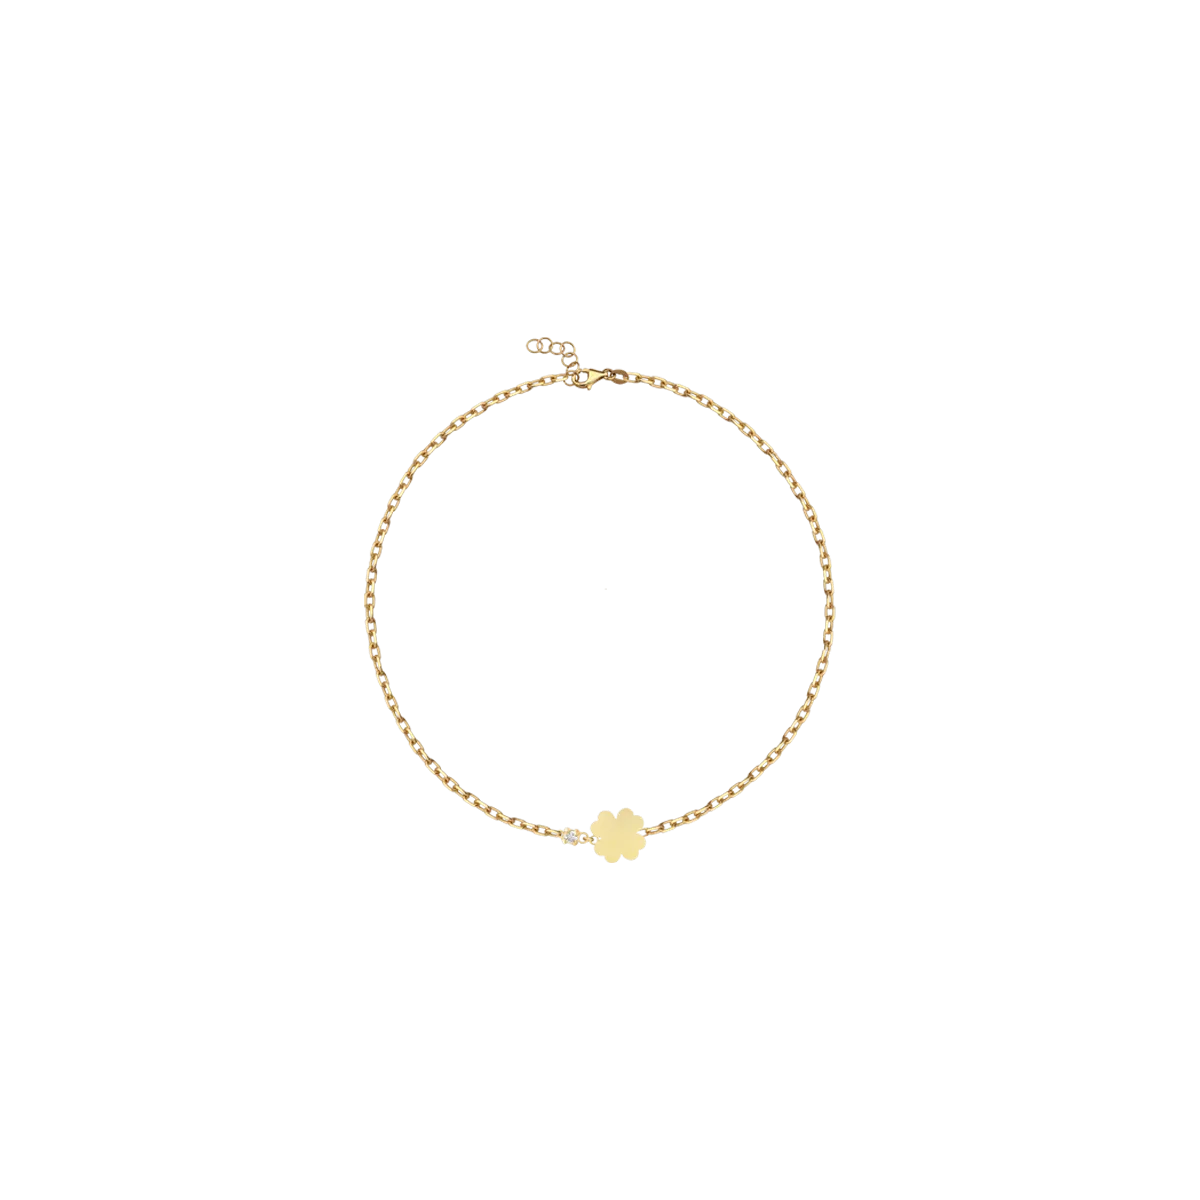 18K yellow gold three leaf clover children bracelet with 0.02ct diamond